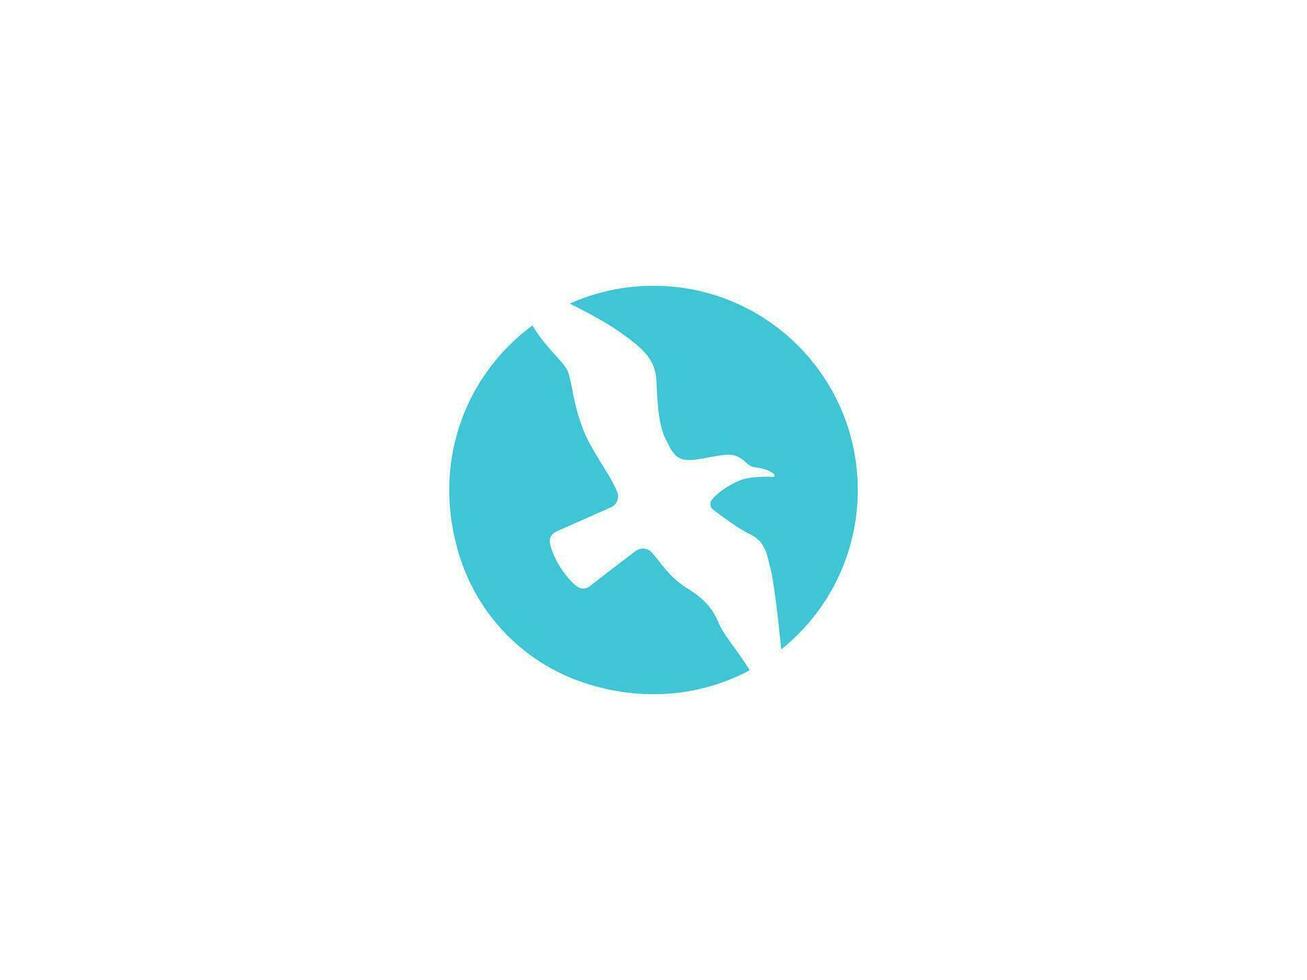 seagull travel logo vector icon illustration, logo template